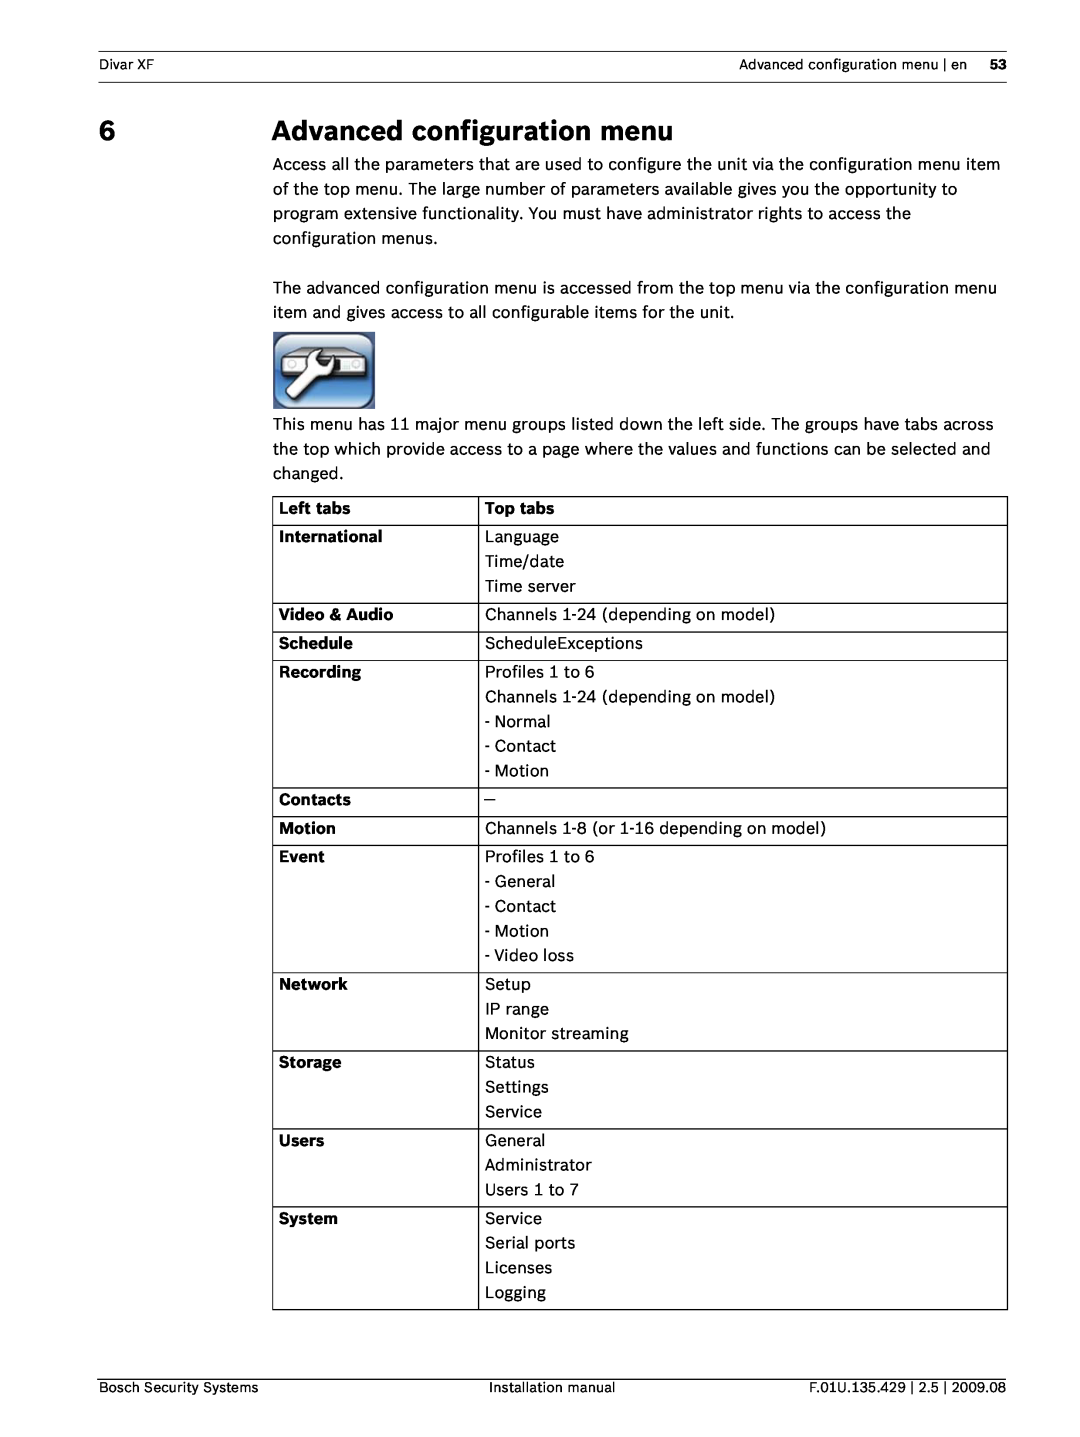 Bosch Appliances XF 6Advanced configuration menu, Left tabs, Top tabs, International, Video & Audio, Schedule, Recording 